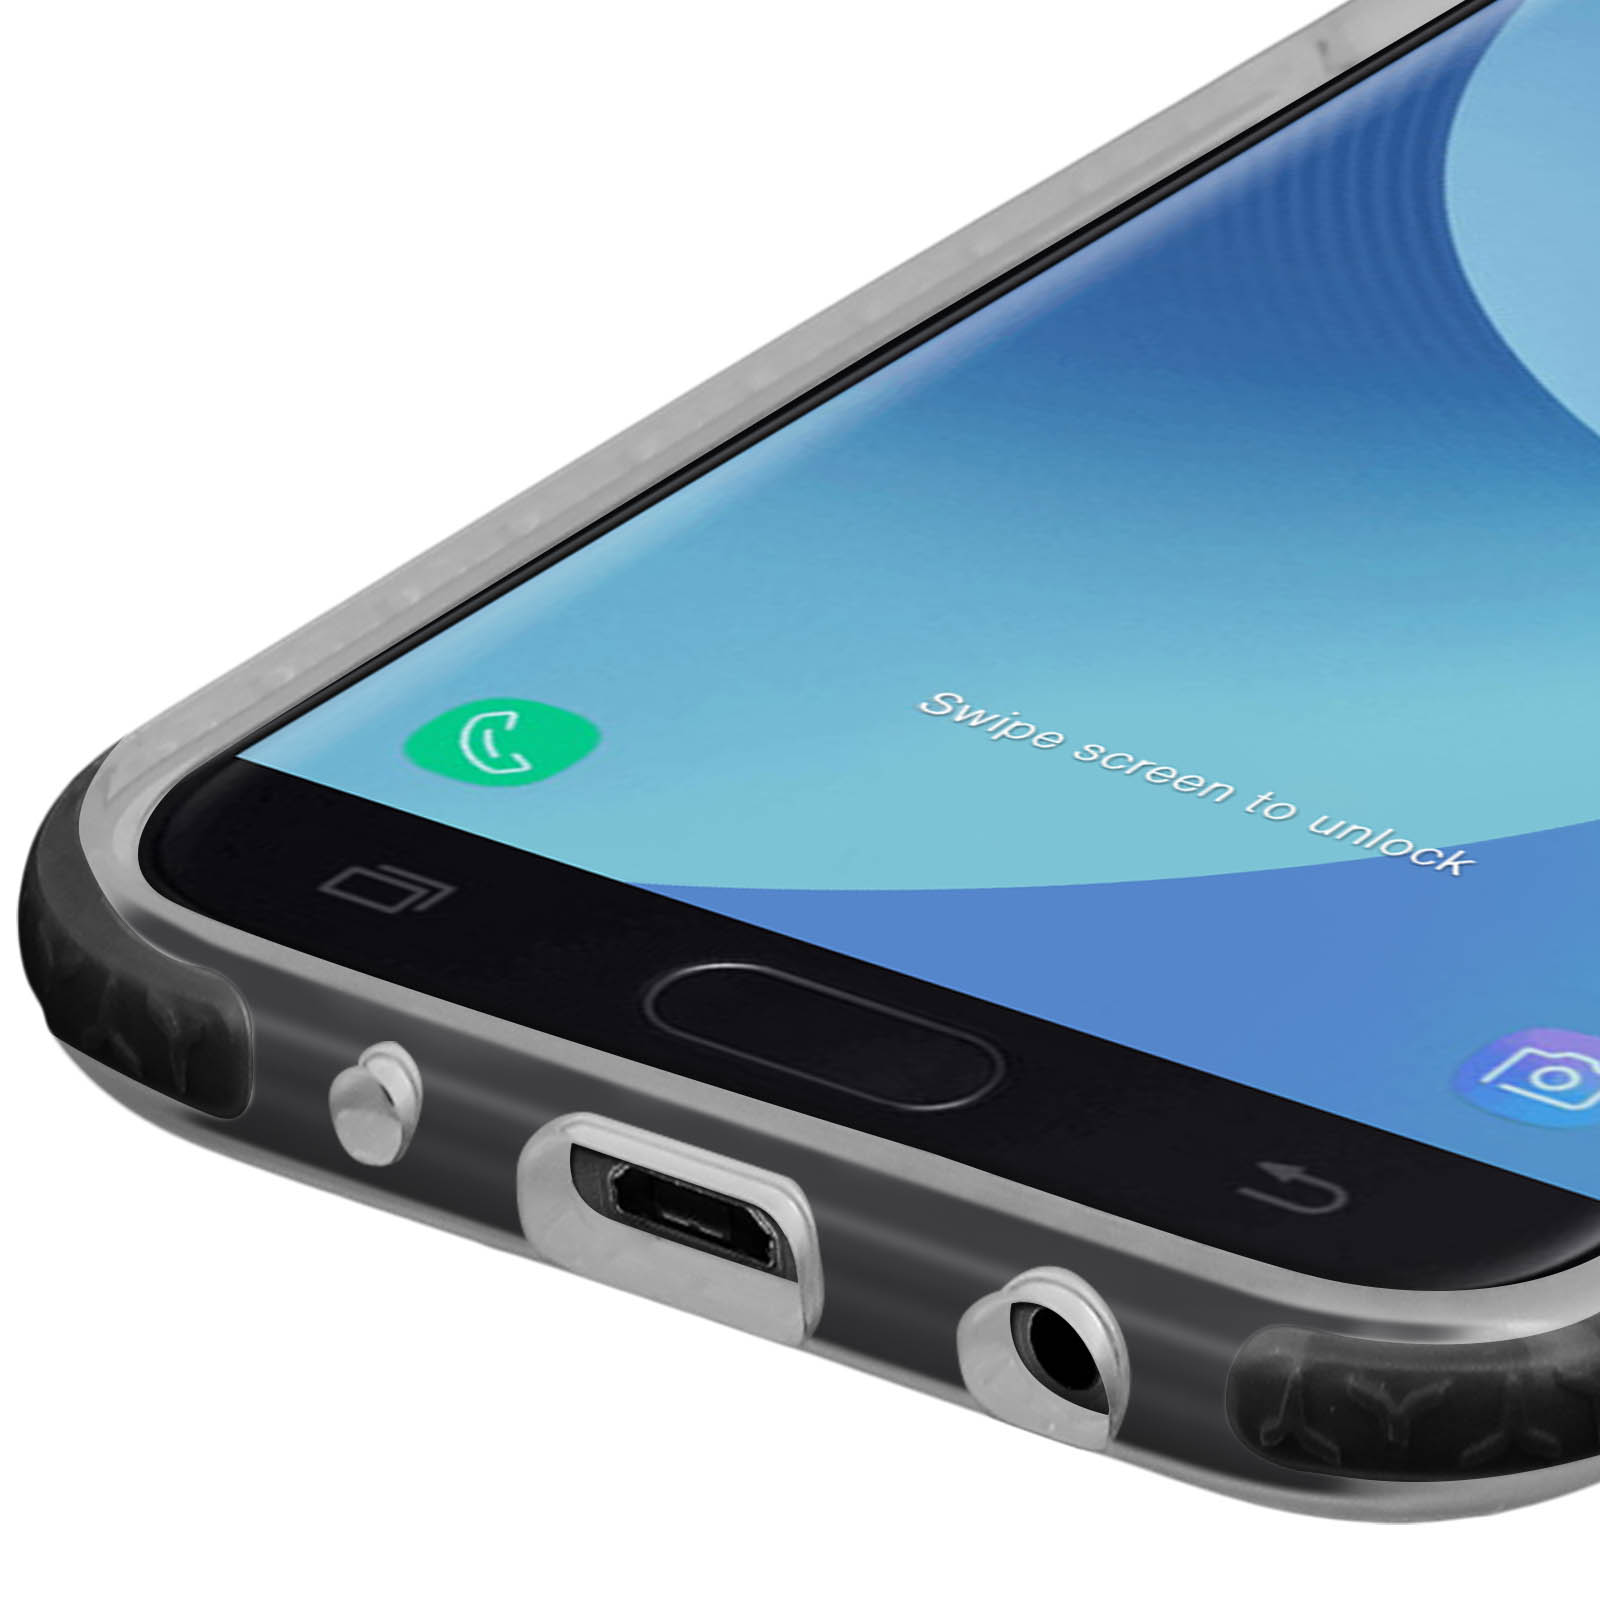 Samsung, FORCE CASE Tryax-System Series, 2017, Galaxy J5 Life mit Schwarz Backcover,